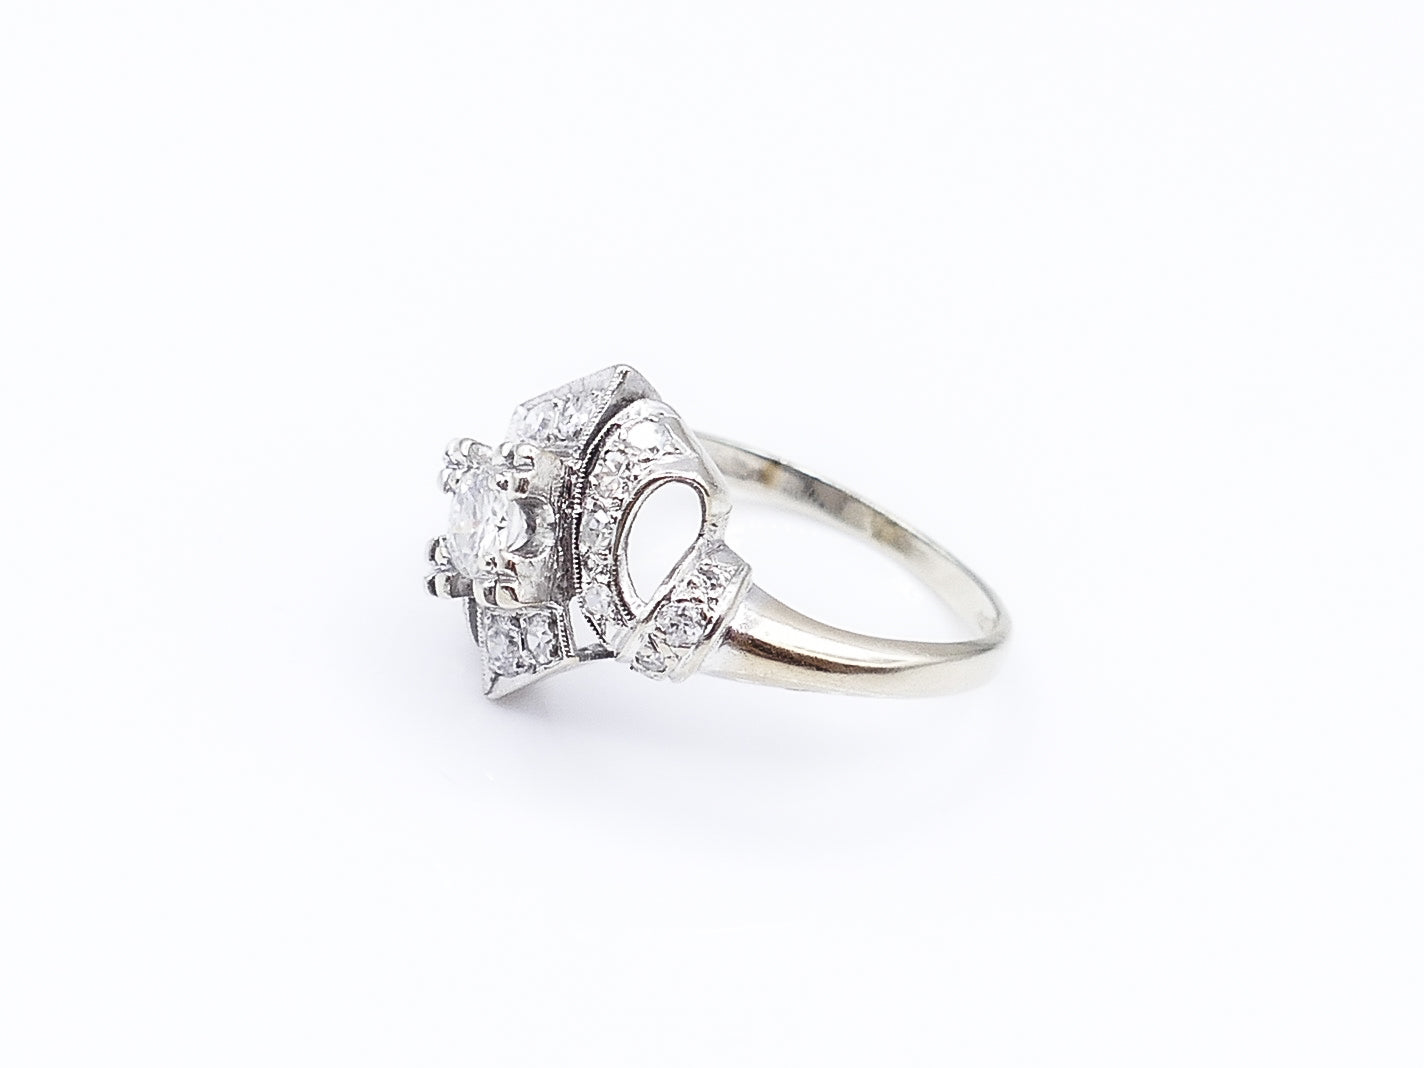 Art Deco Diamond White Gold Engagement Ring